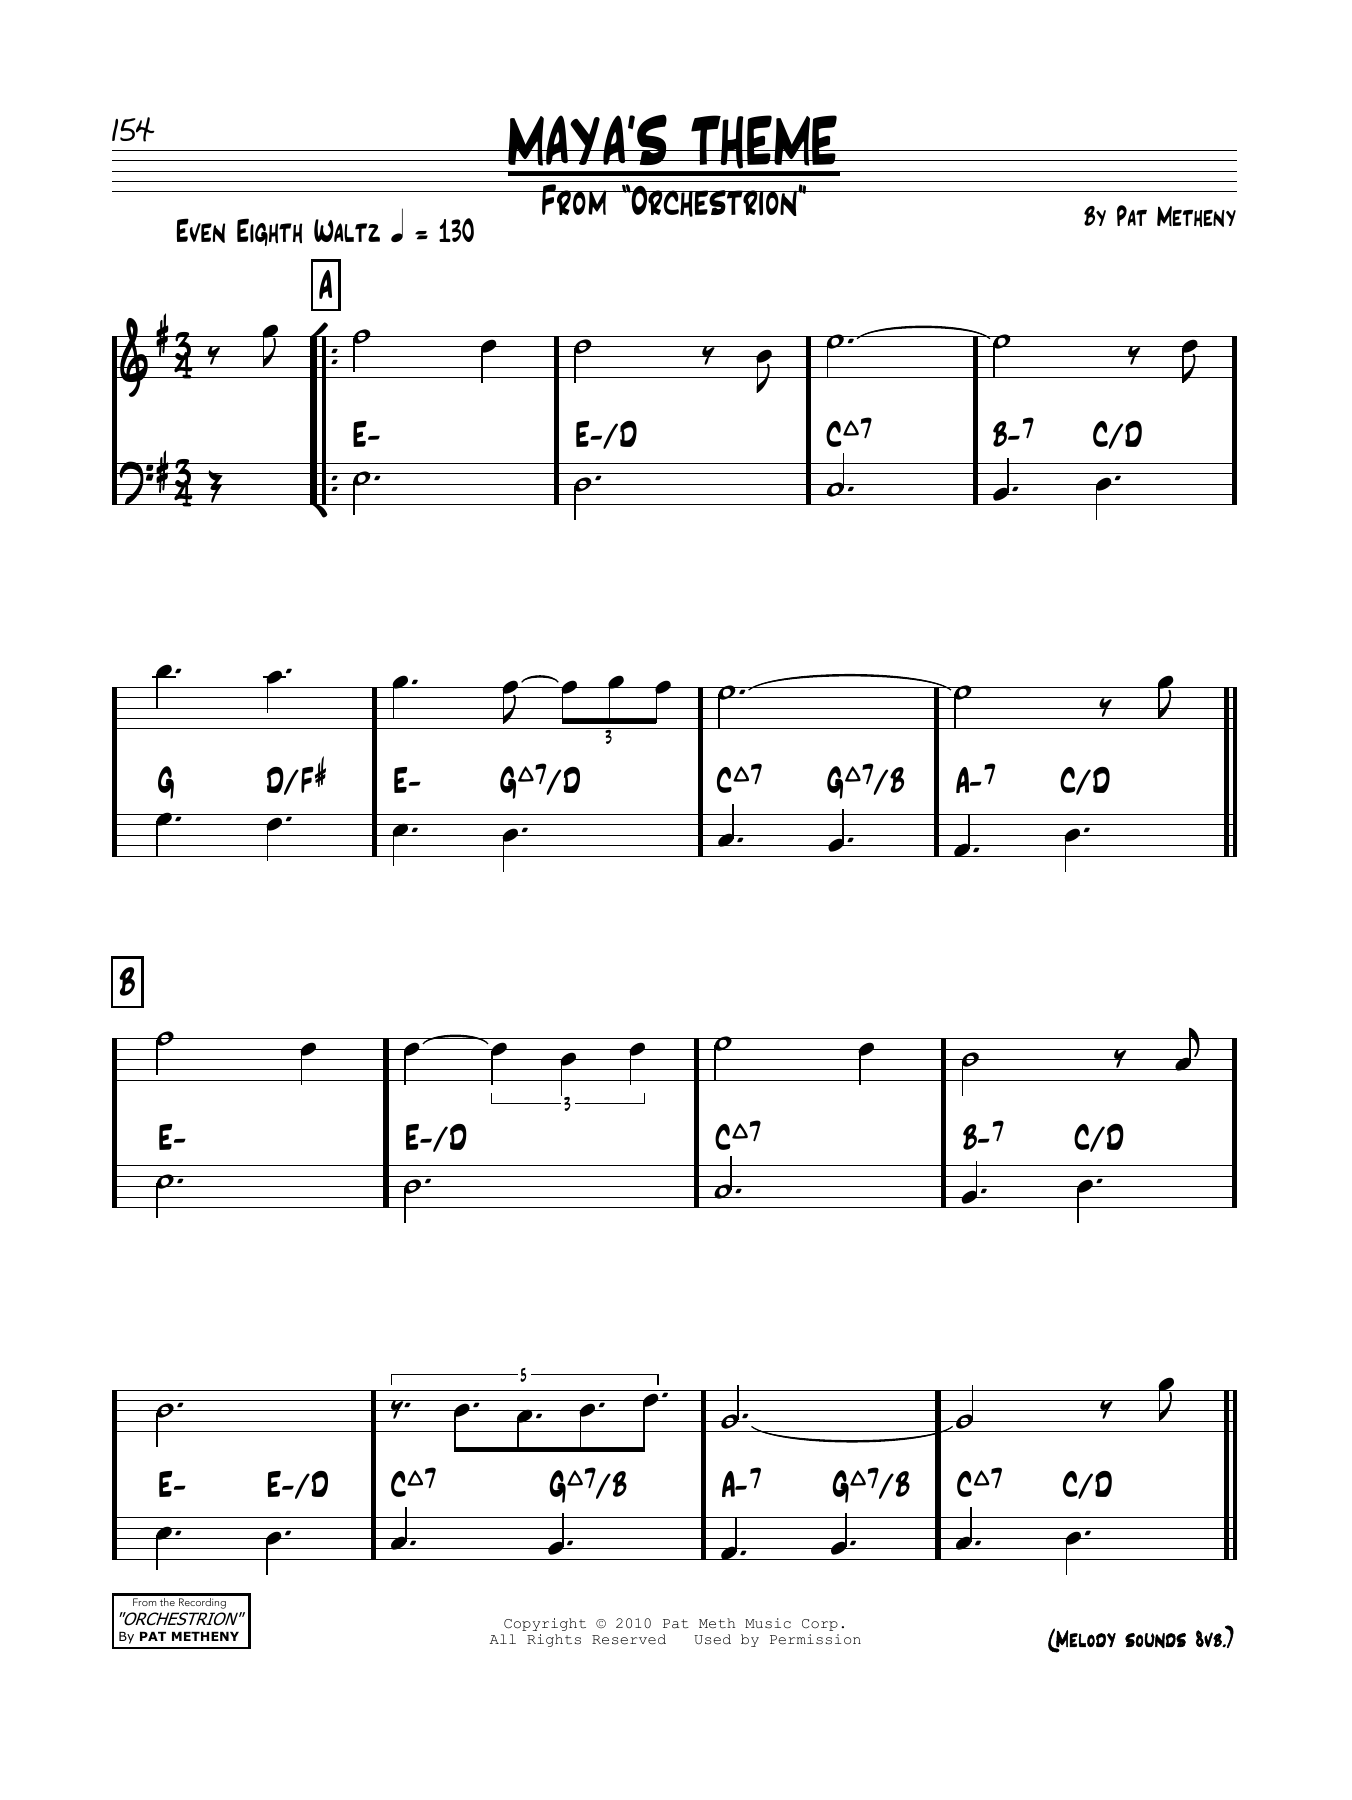 Pat Metheny Maya's Theme Sheet Music Notes & Chords for Real Book – Melody & Chords - Download or Print PDF